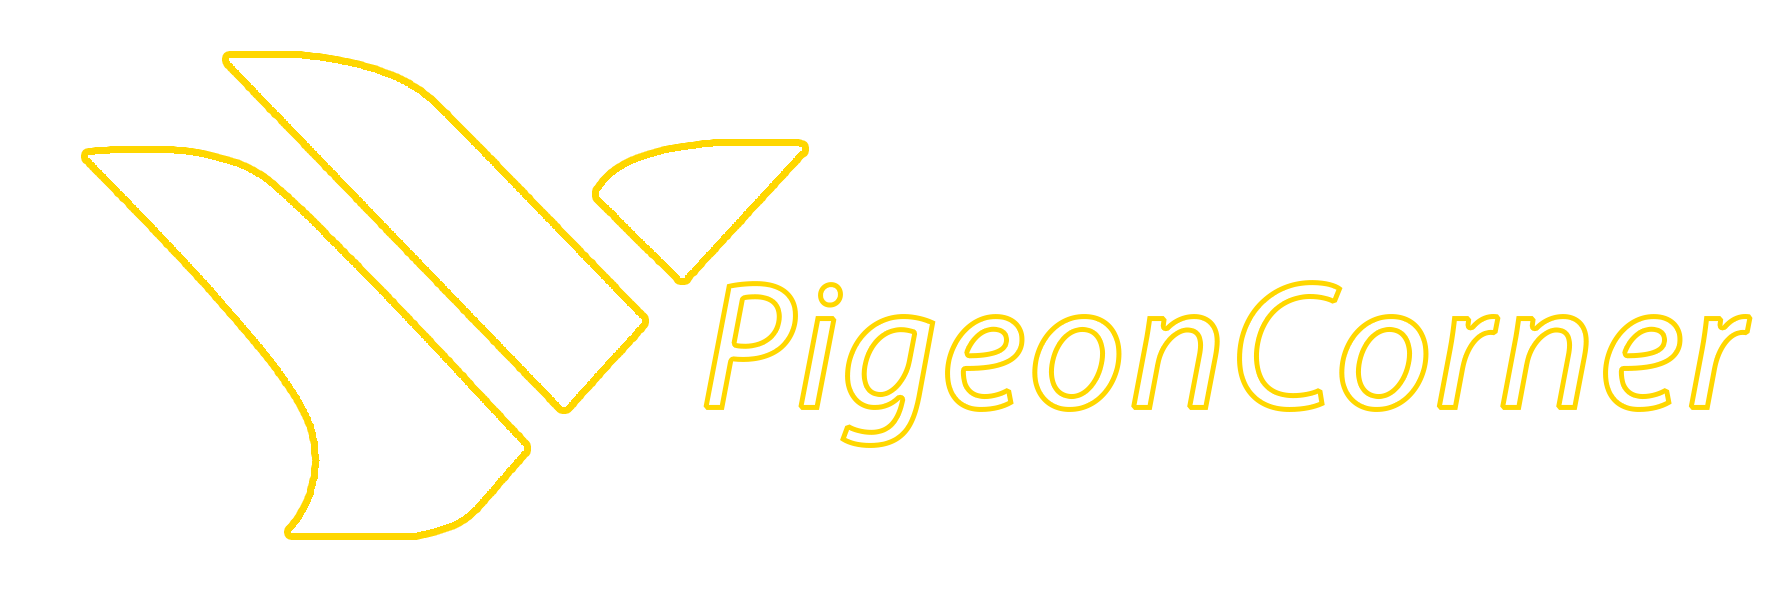 PigeonCorner